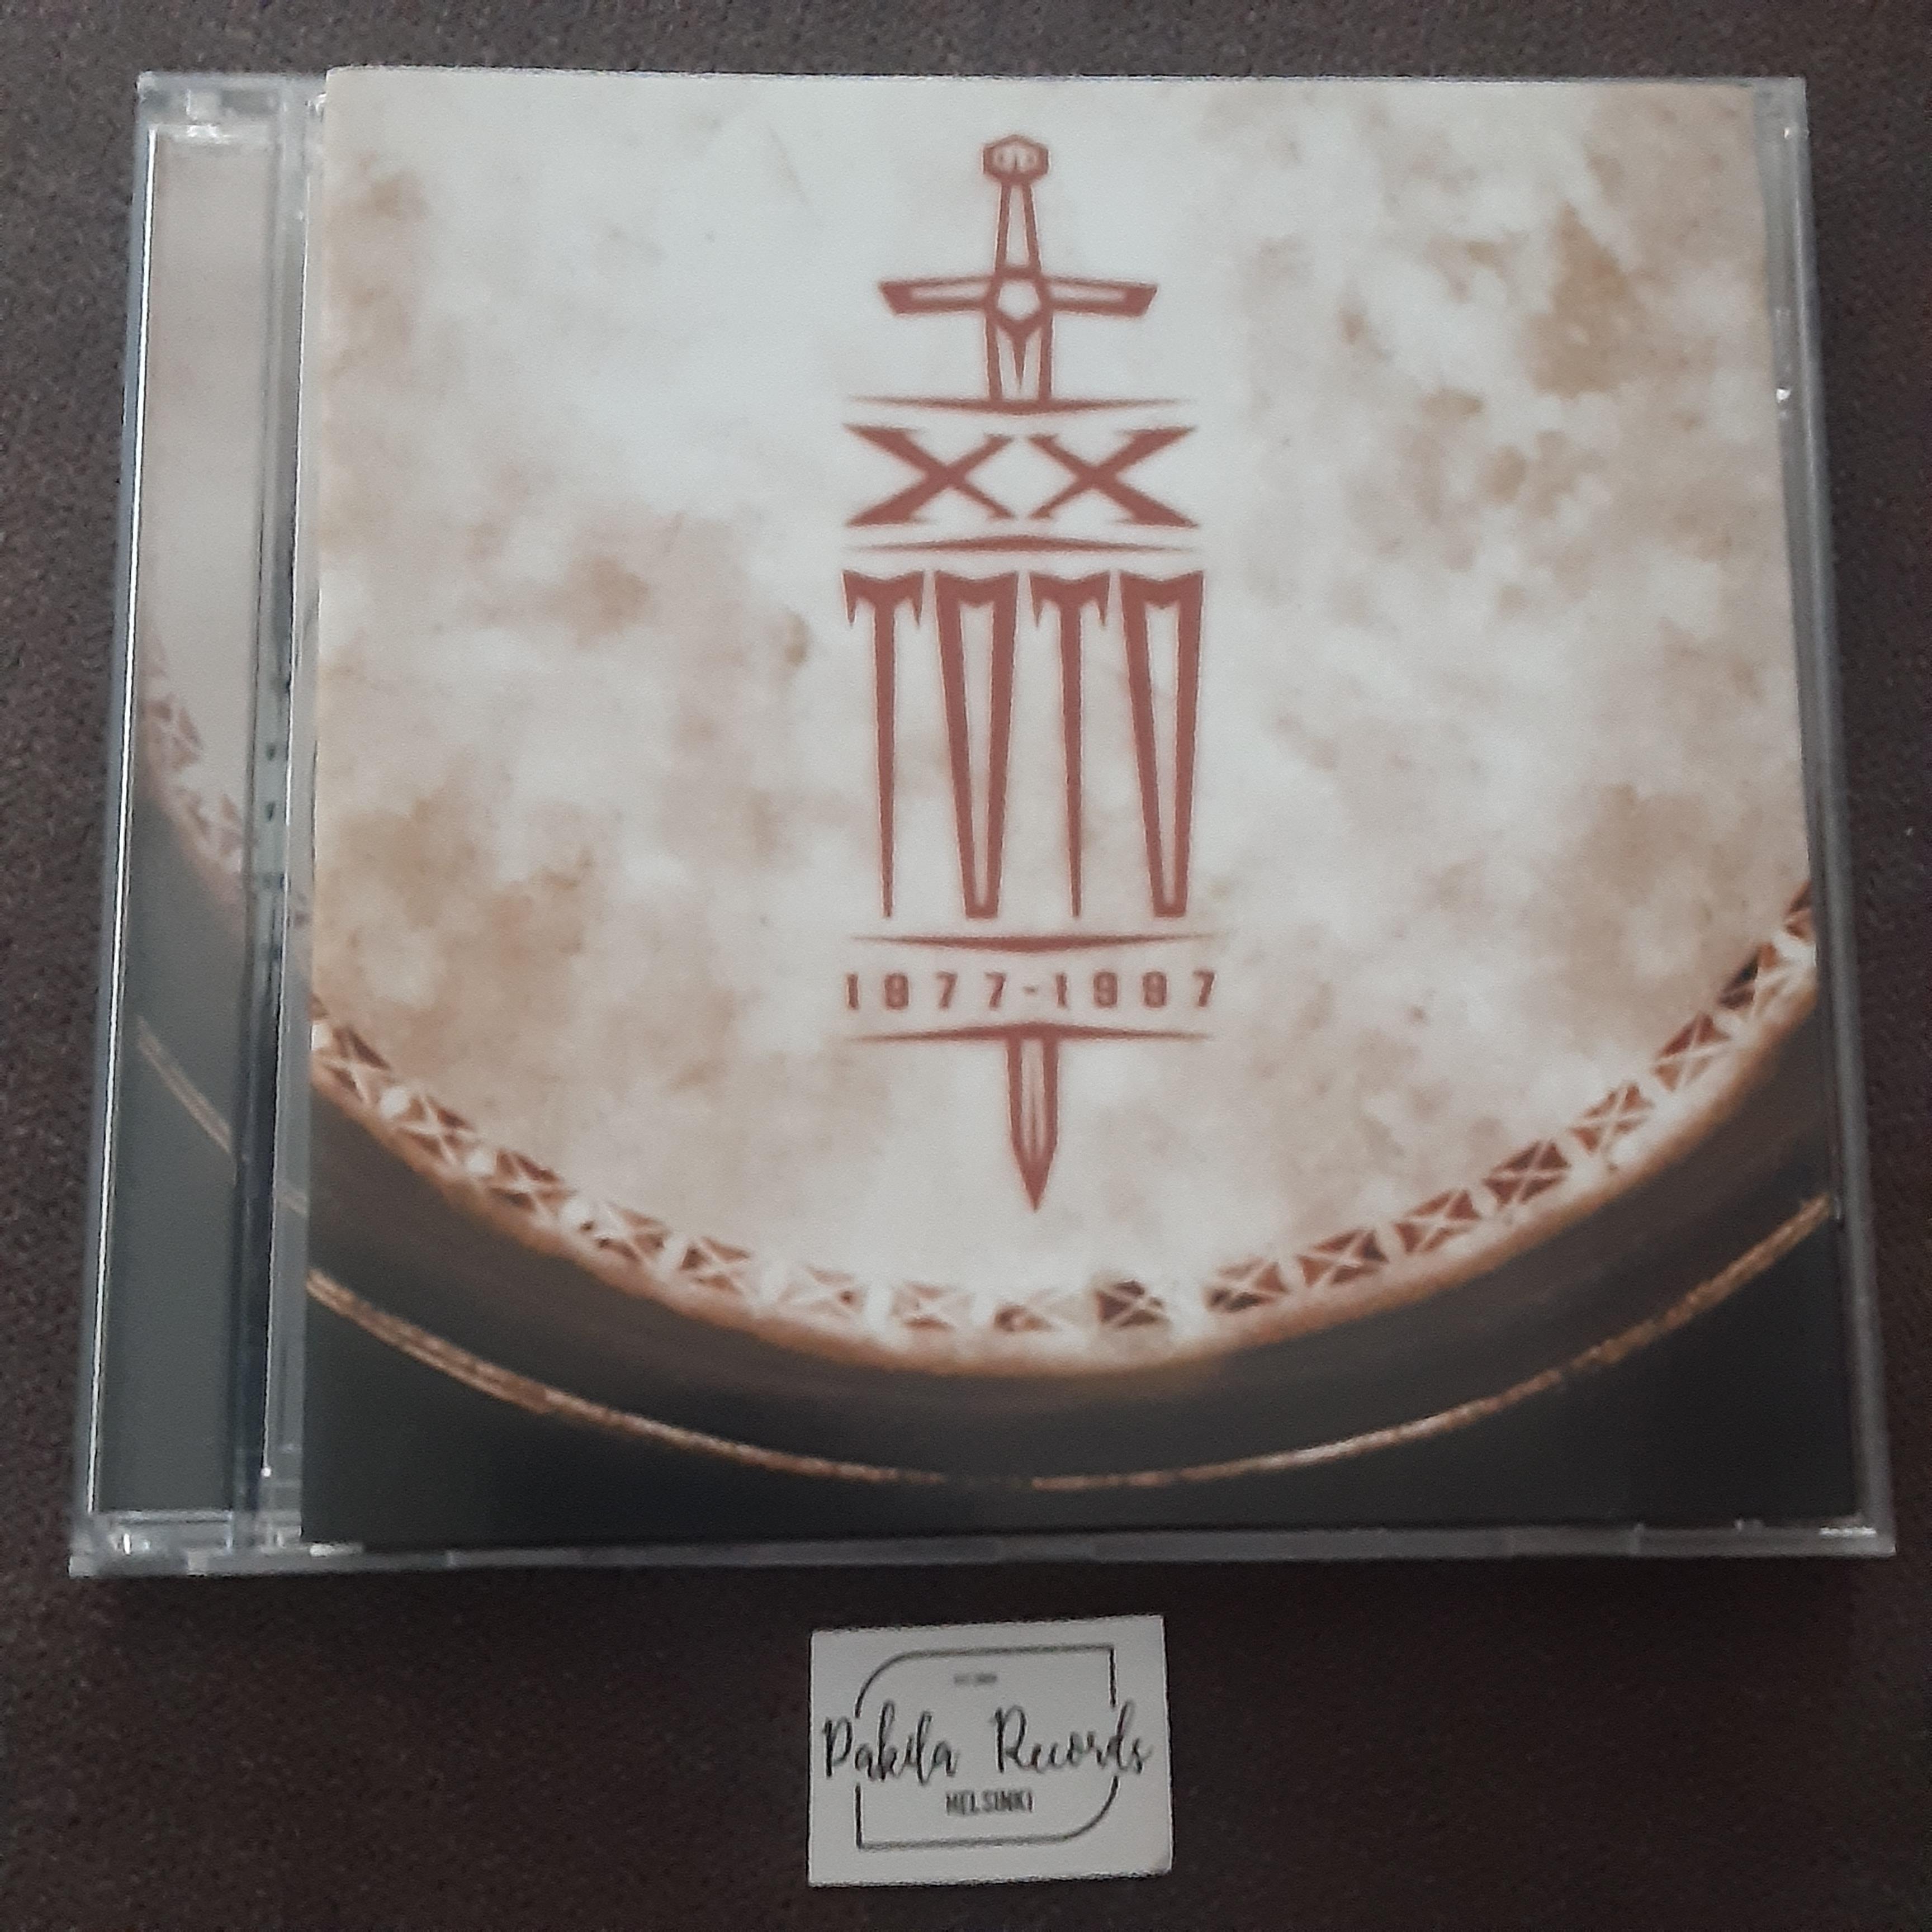 Toto - XX (1977-1997) -  CD (käytetty)